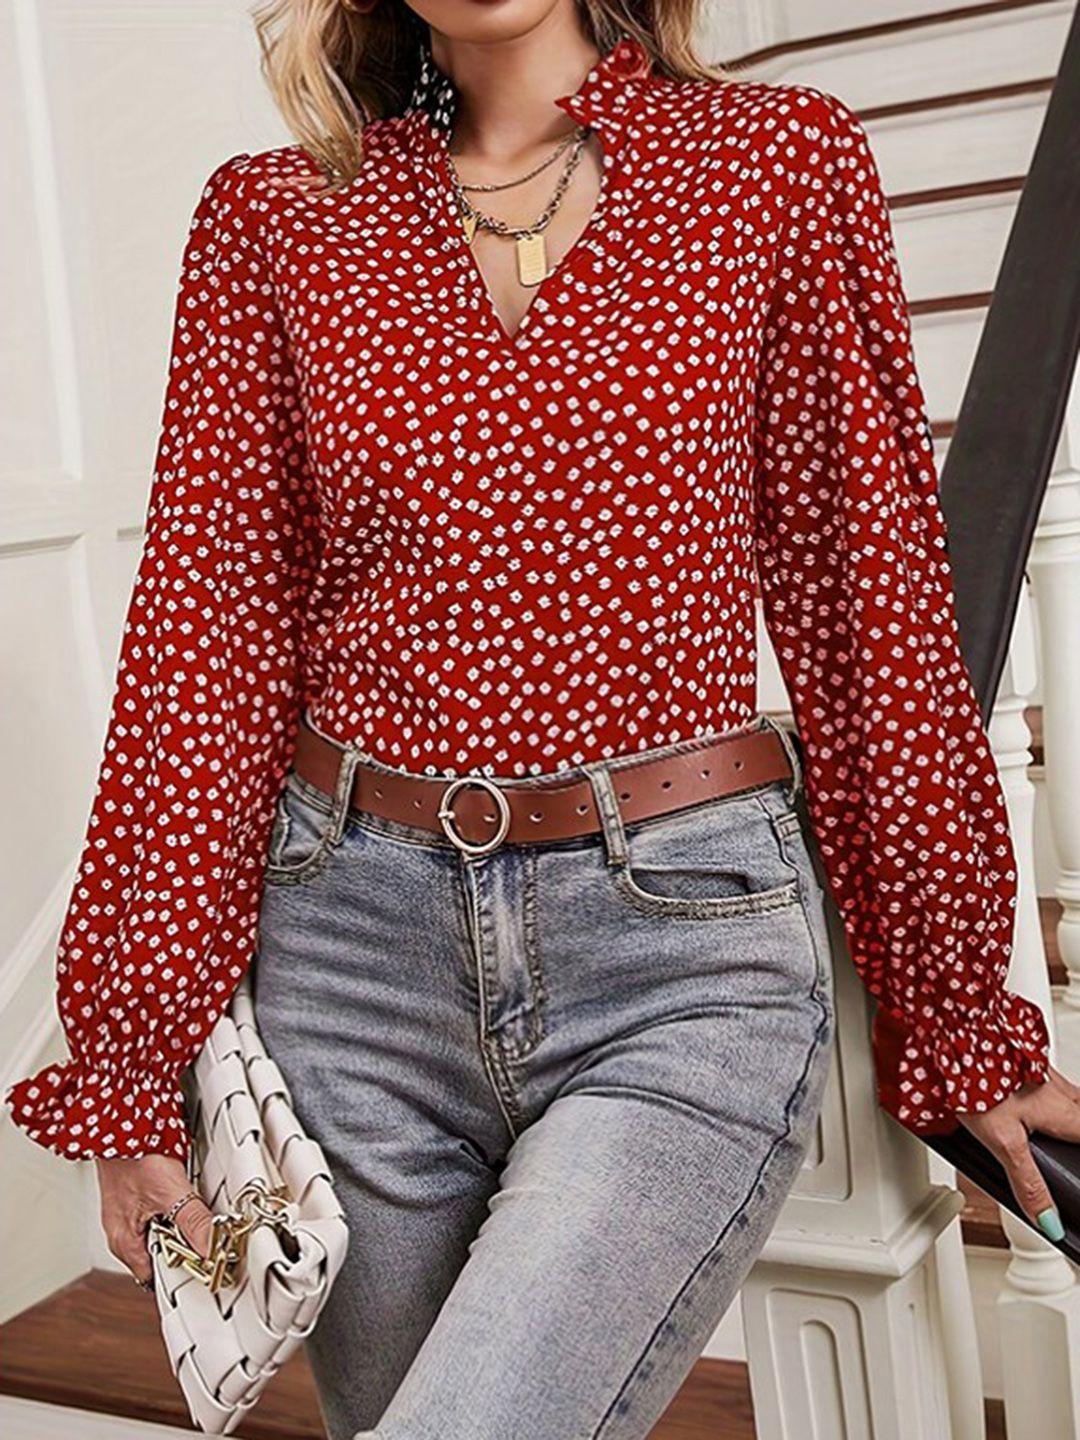 stylecast-women-polka-dot-opaque-printed-casual-shirt